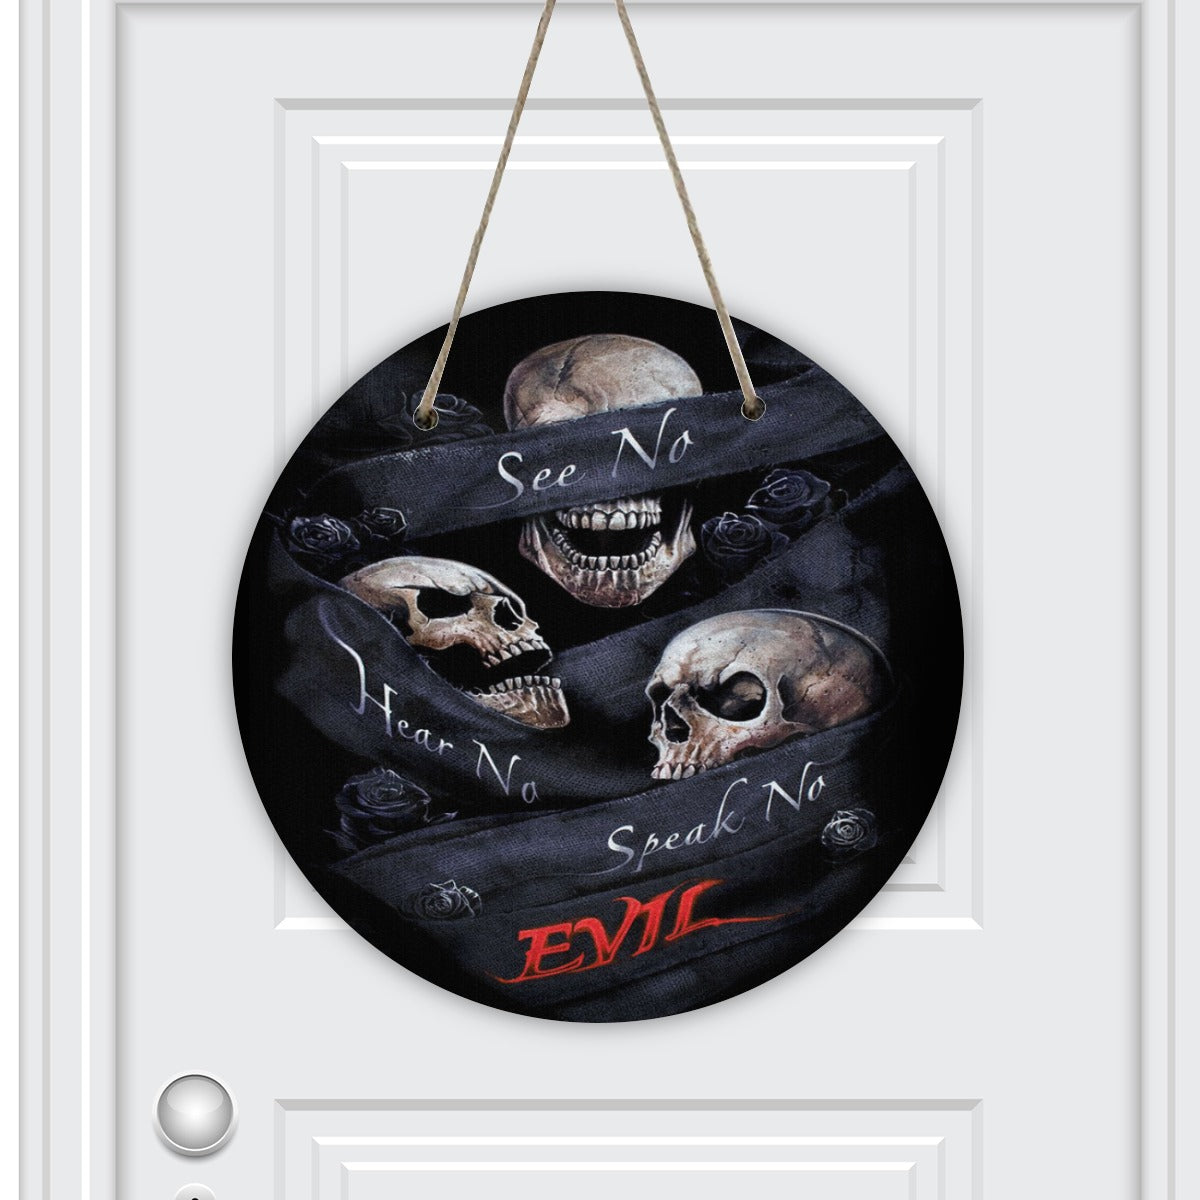 No see no hear no speak evils skull door decoration, skull skeleton Round House Number Door Hanger